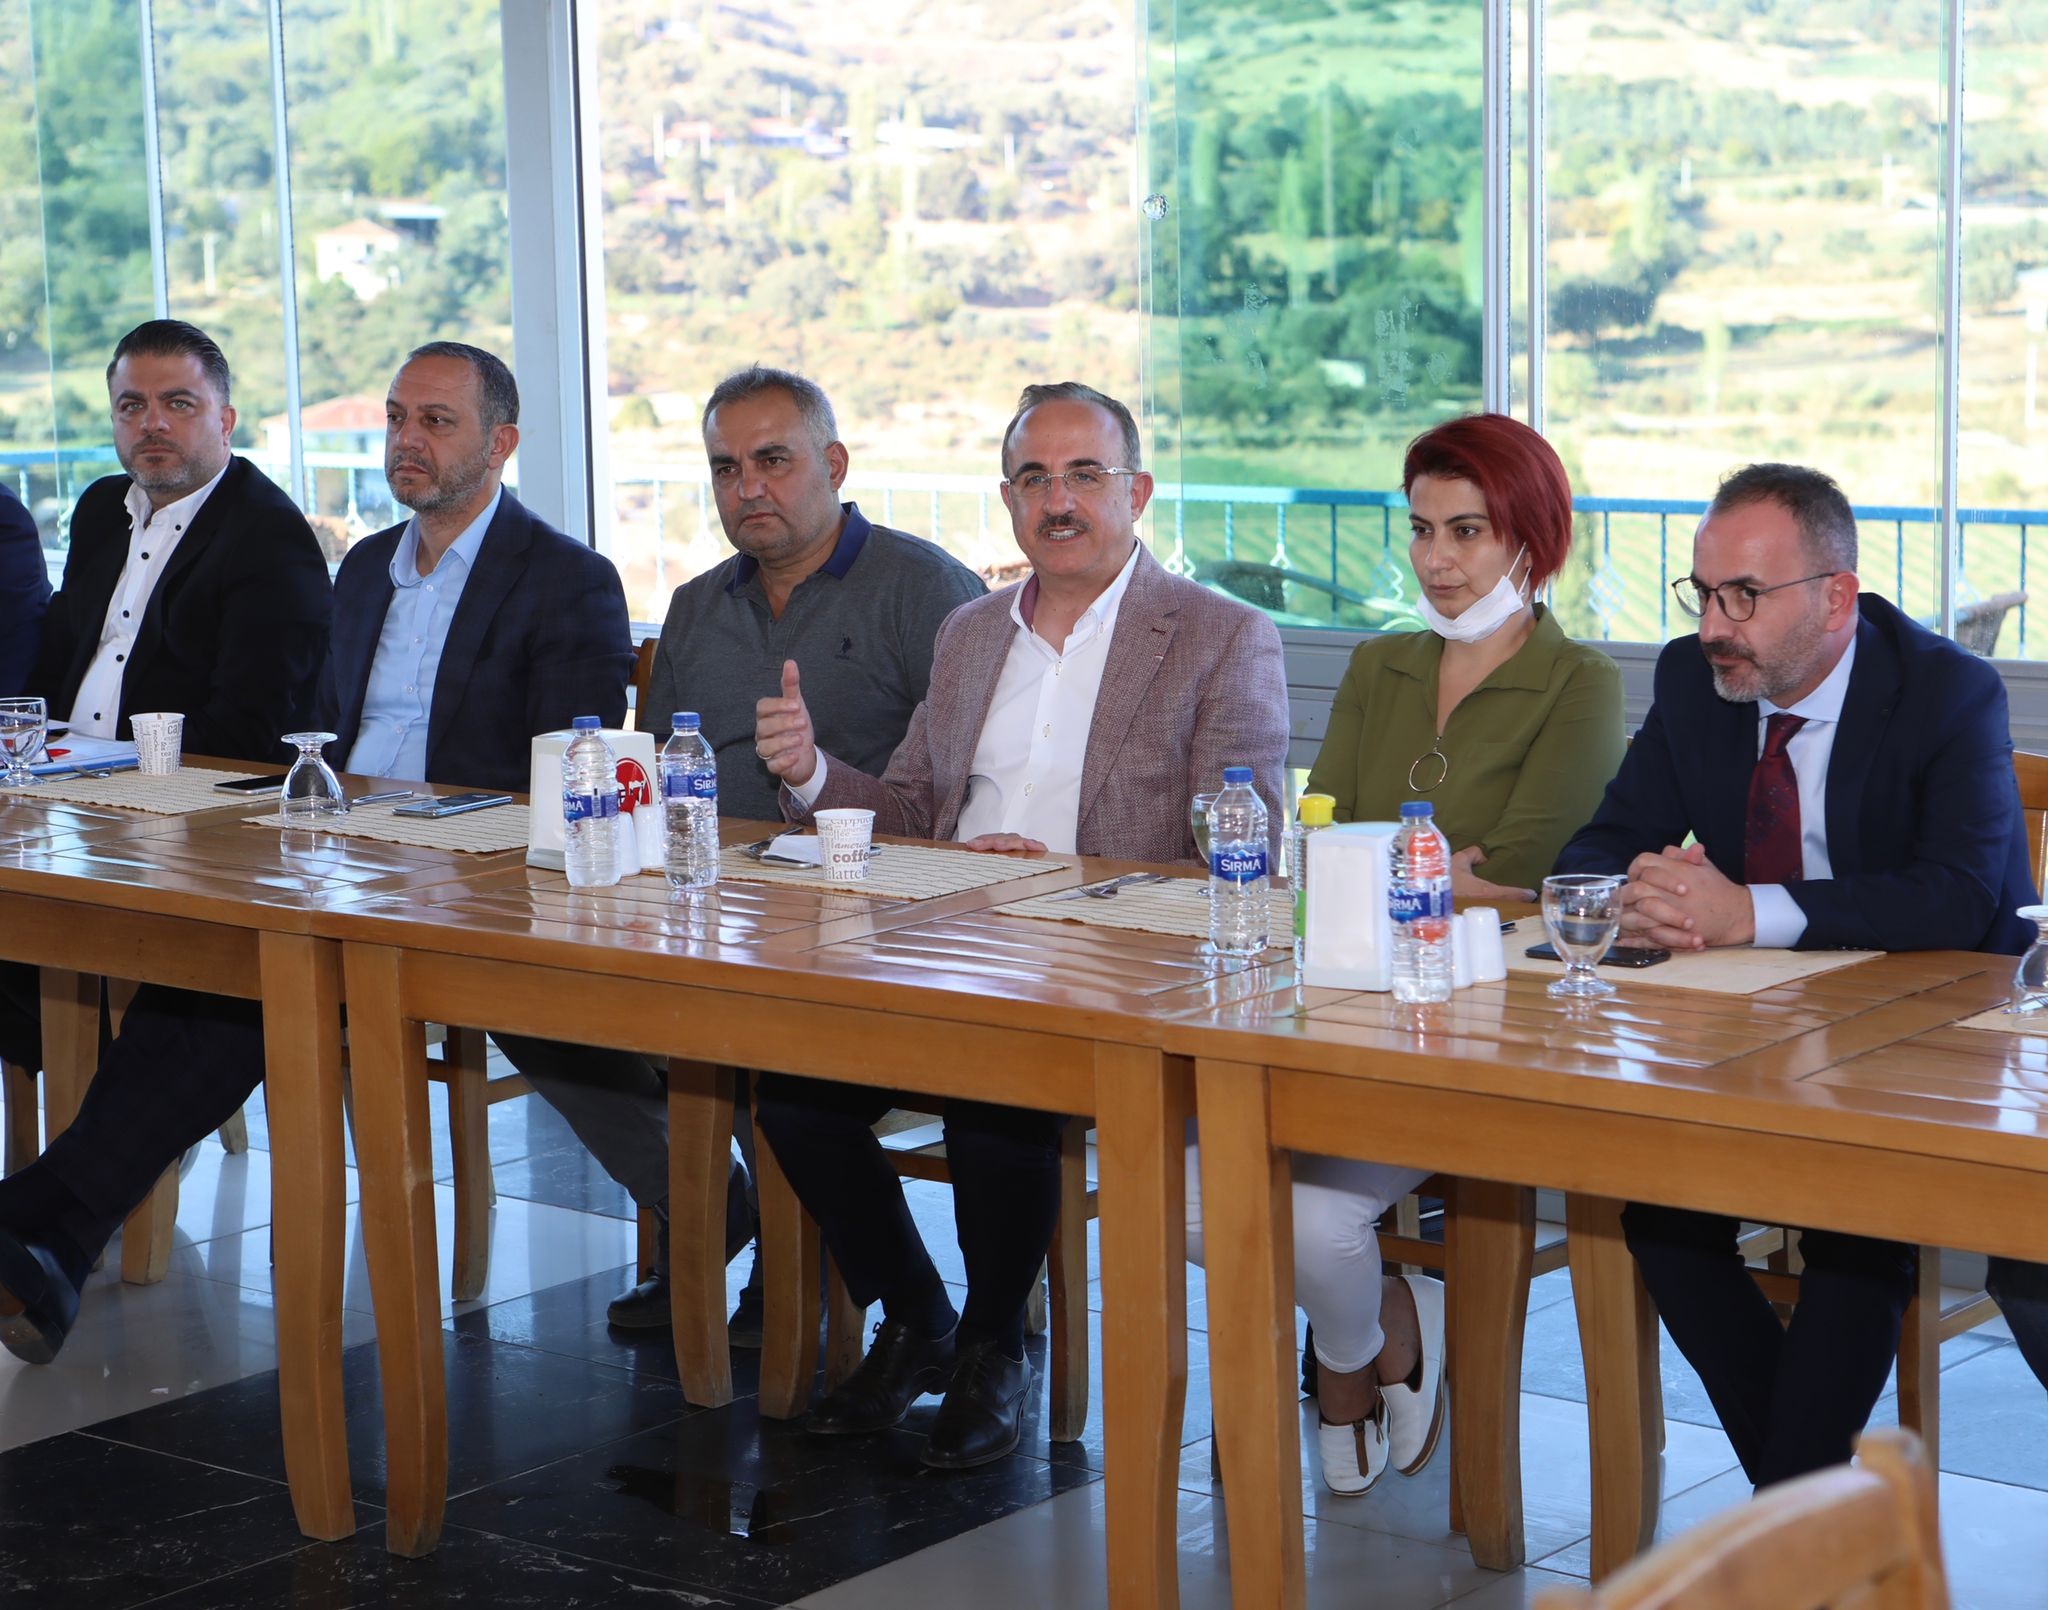 AK Parti İzmir İl Yönetimi Kiraz’da toplandı